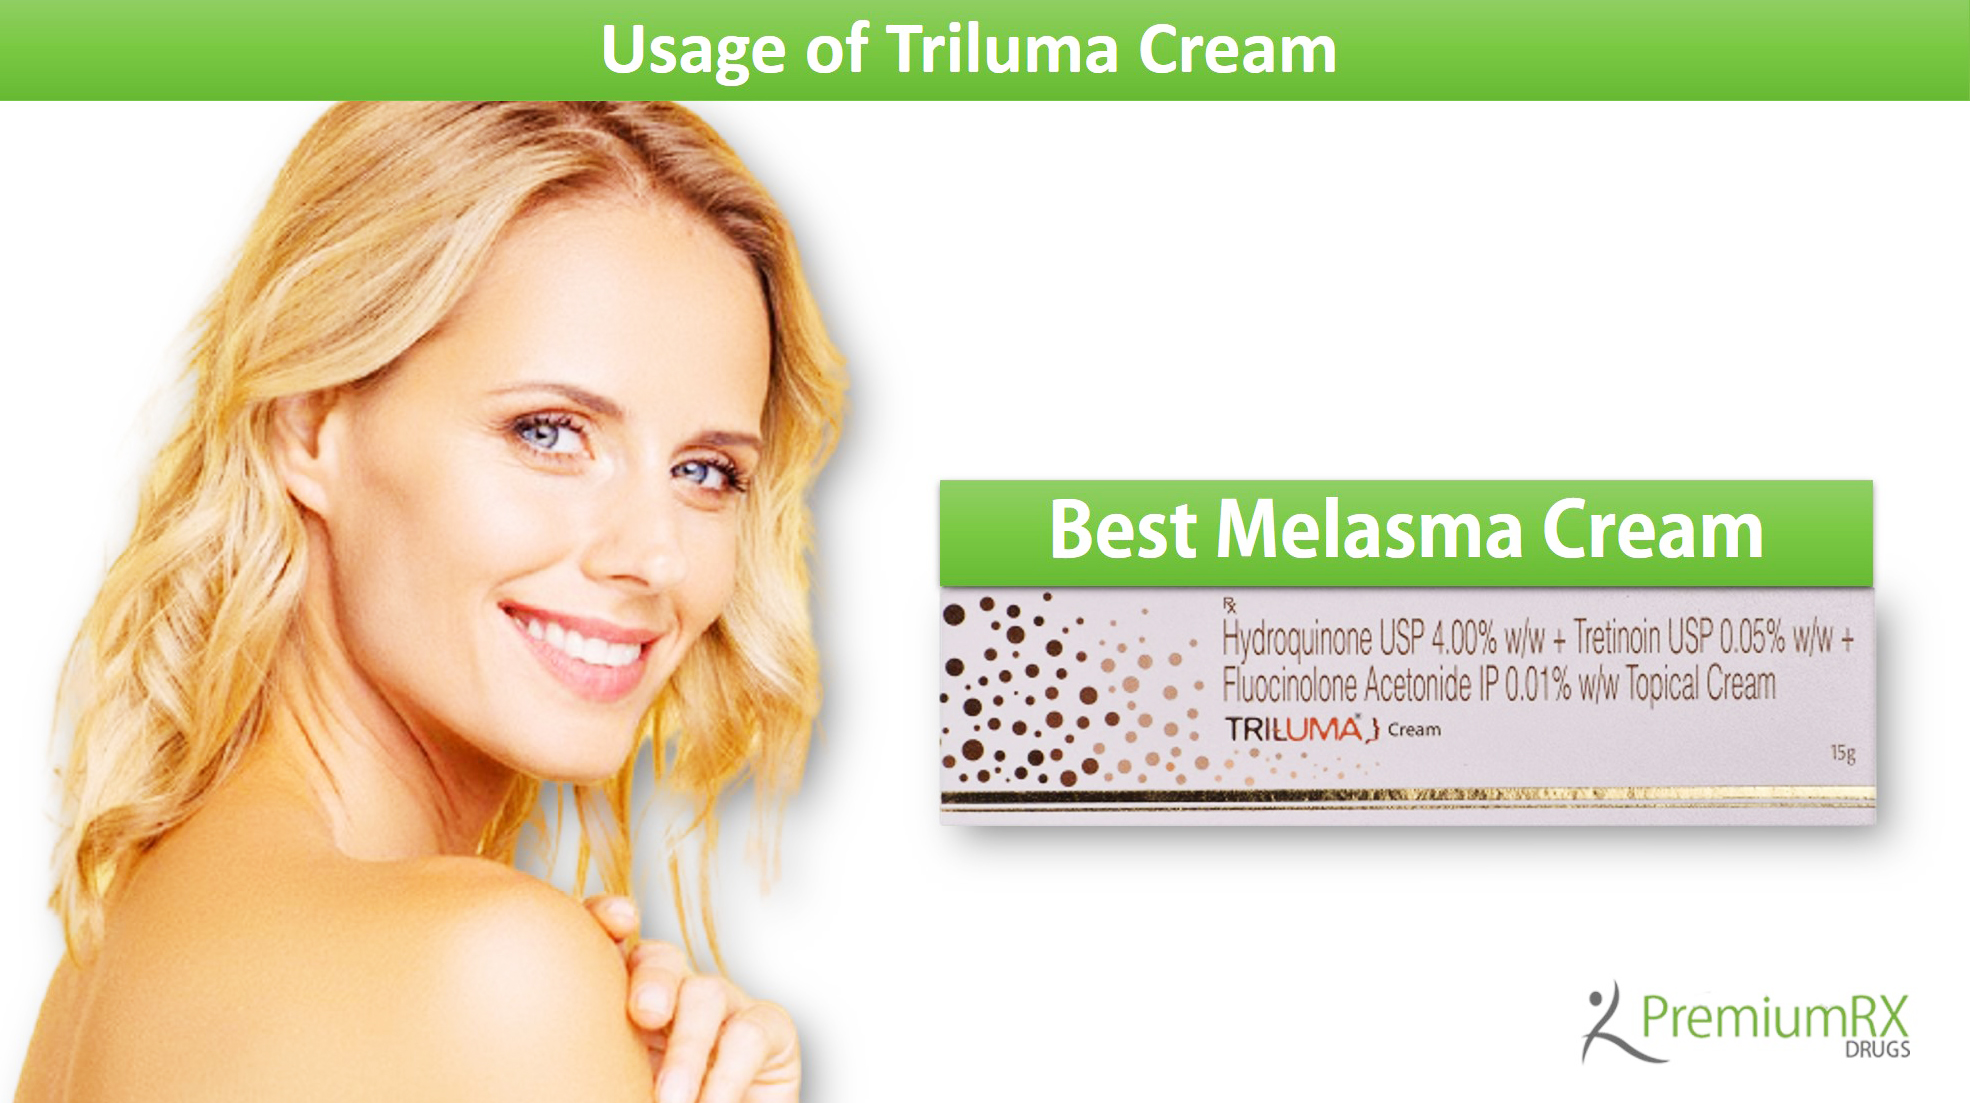 Usage of Triluma Cream